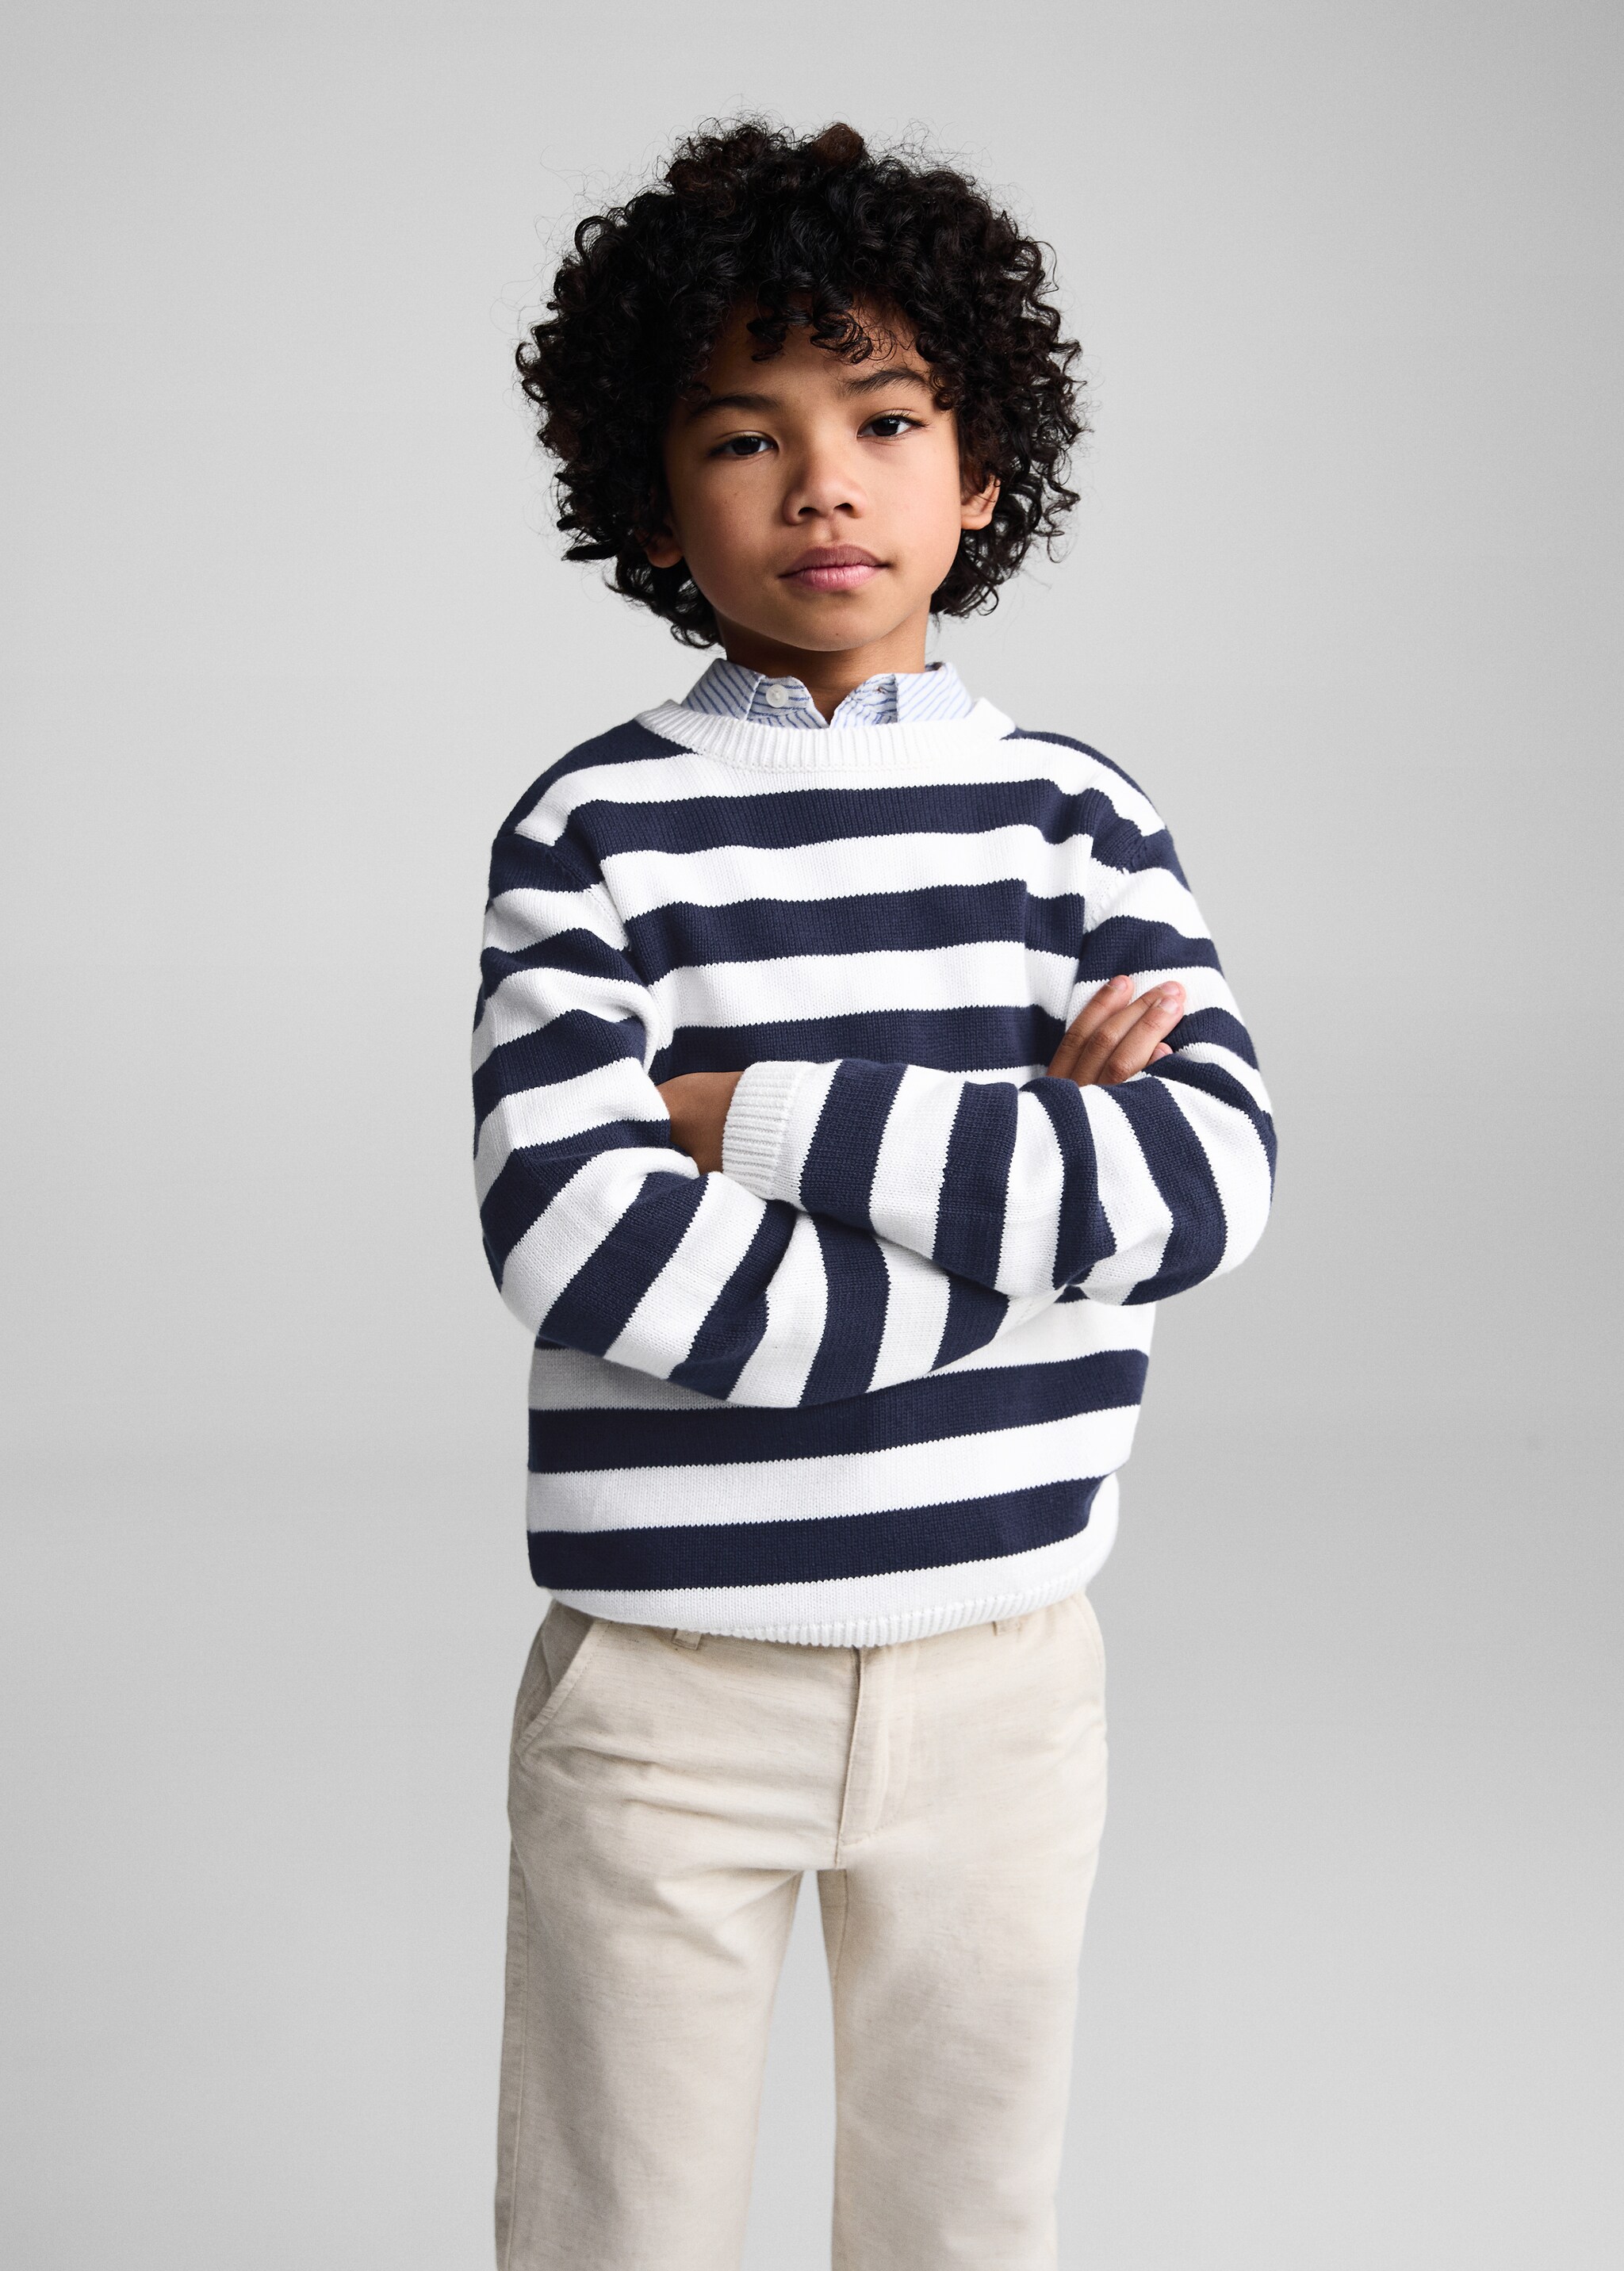 Knit striped sweater - رؤية وسط